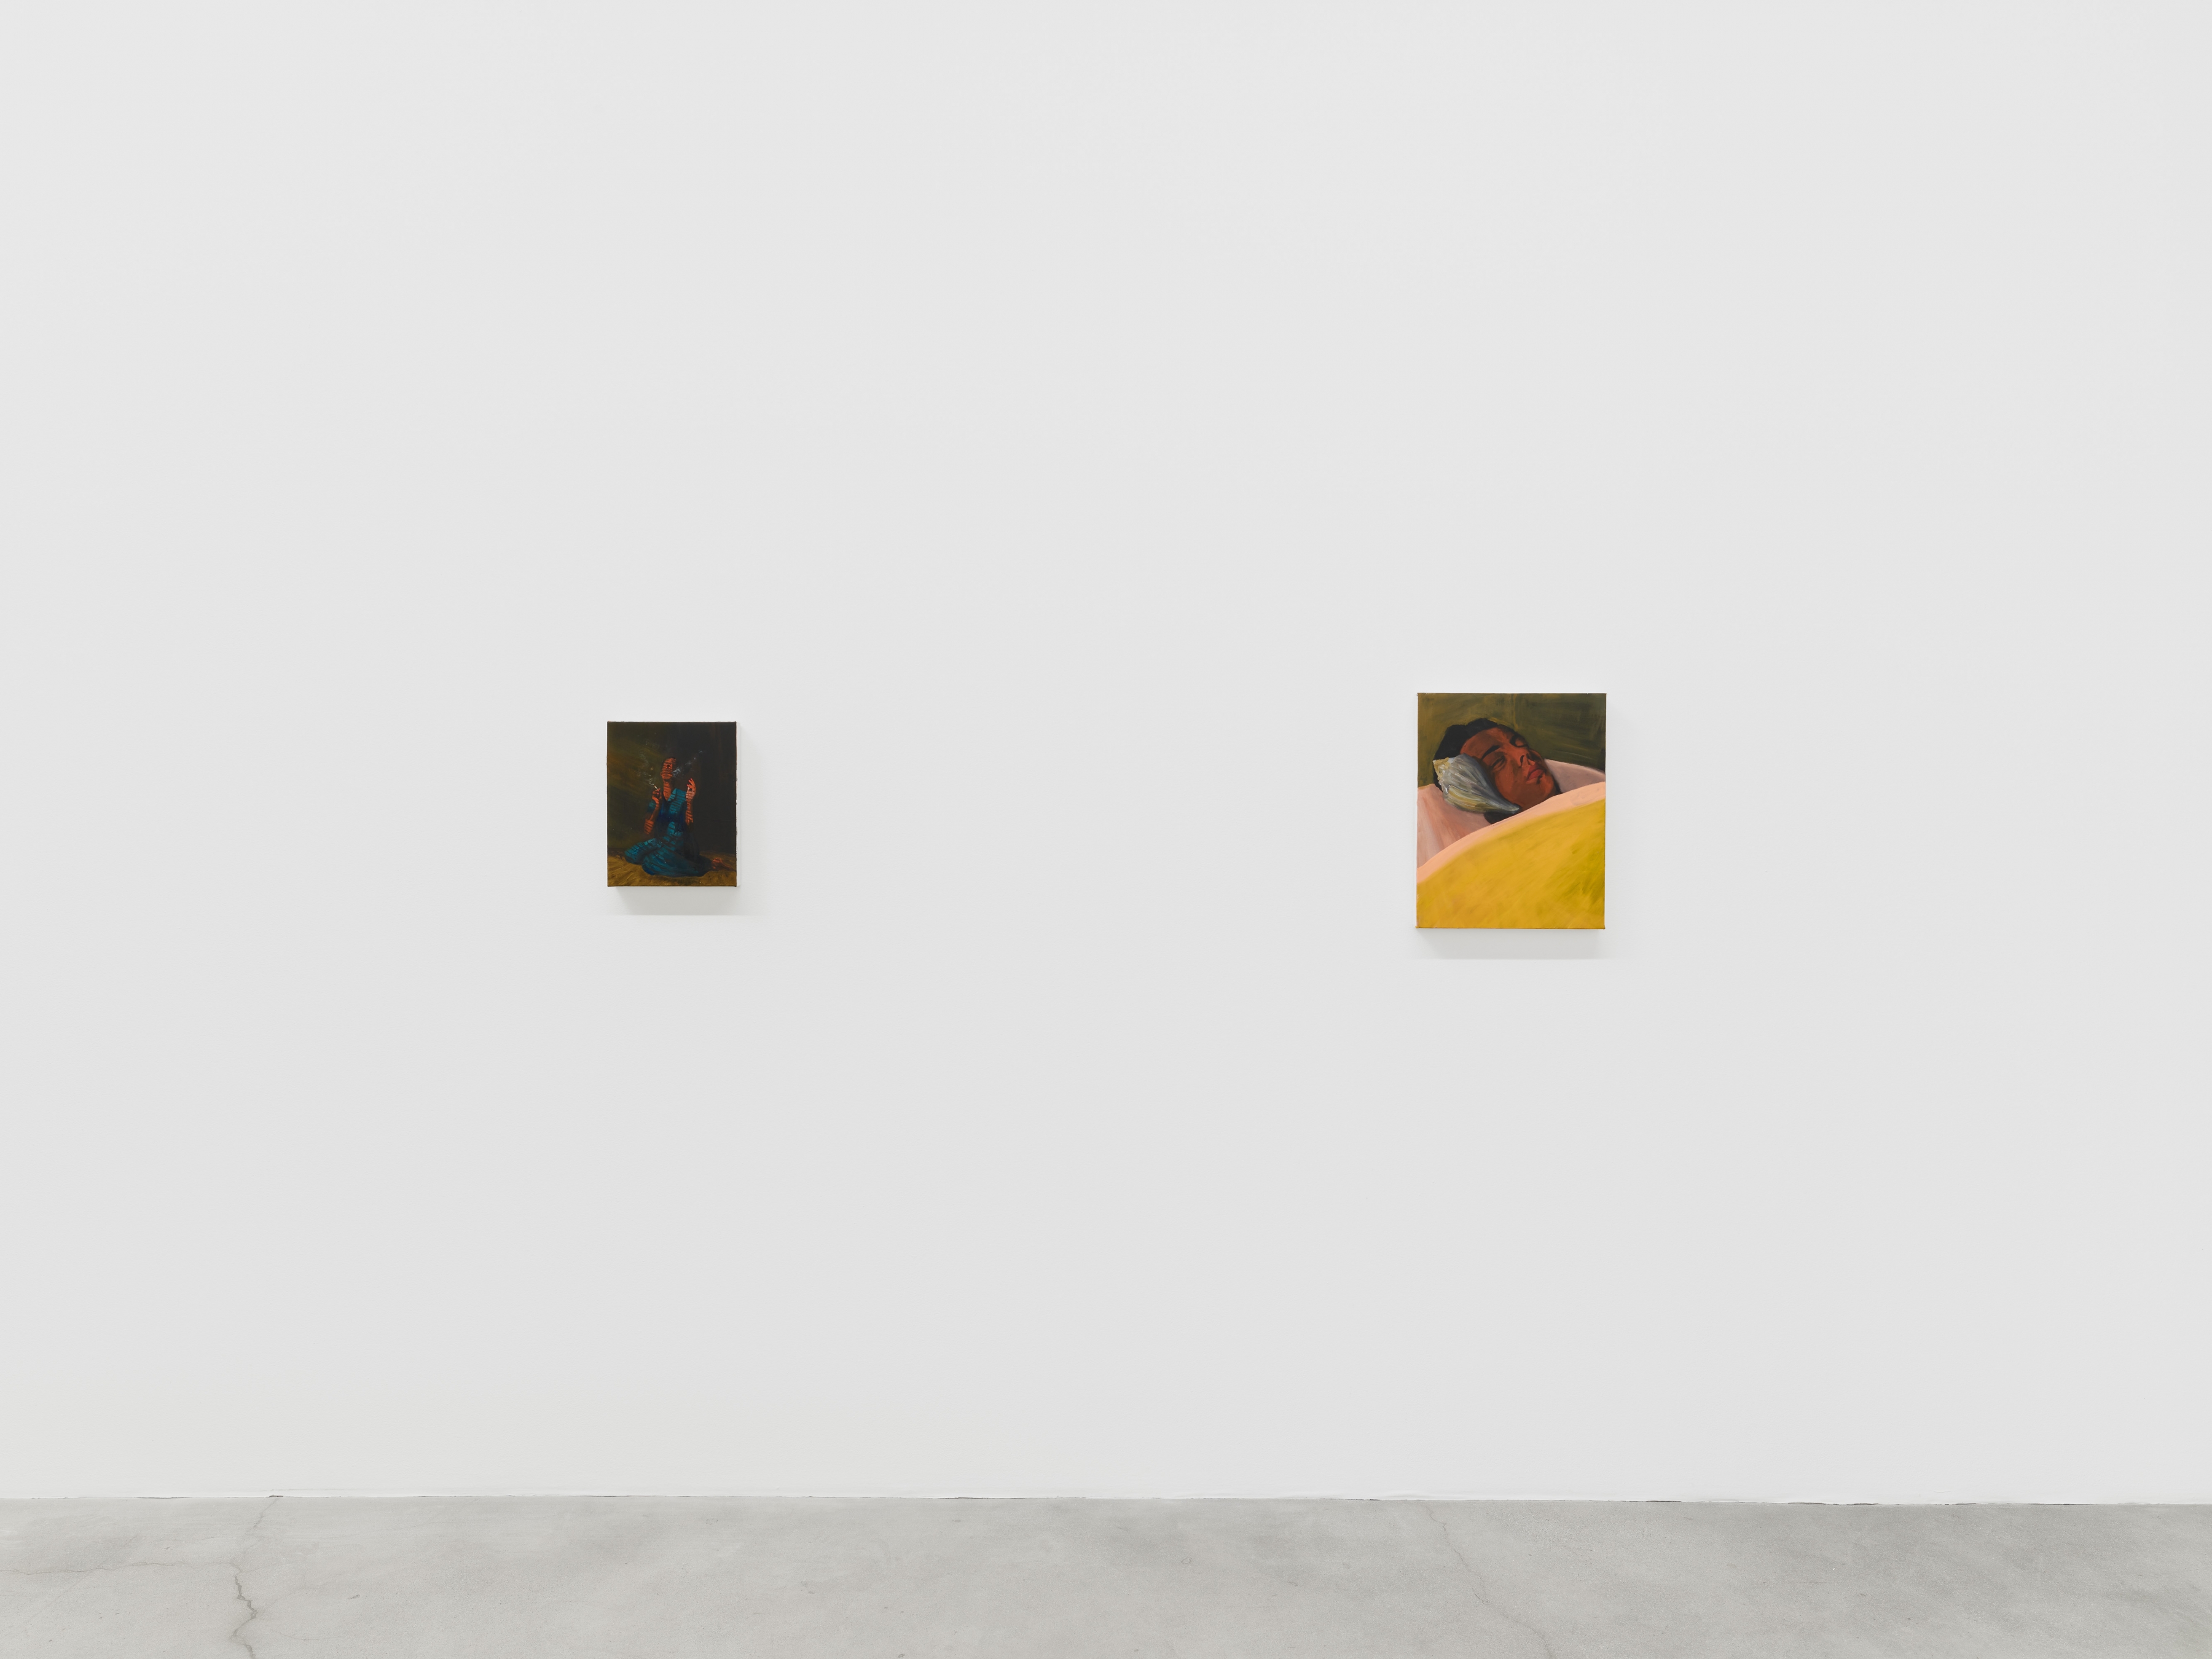 Danielle Mckinney, Smoke and Mirrors, installation view, 2021